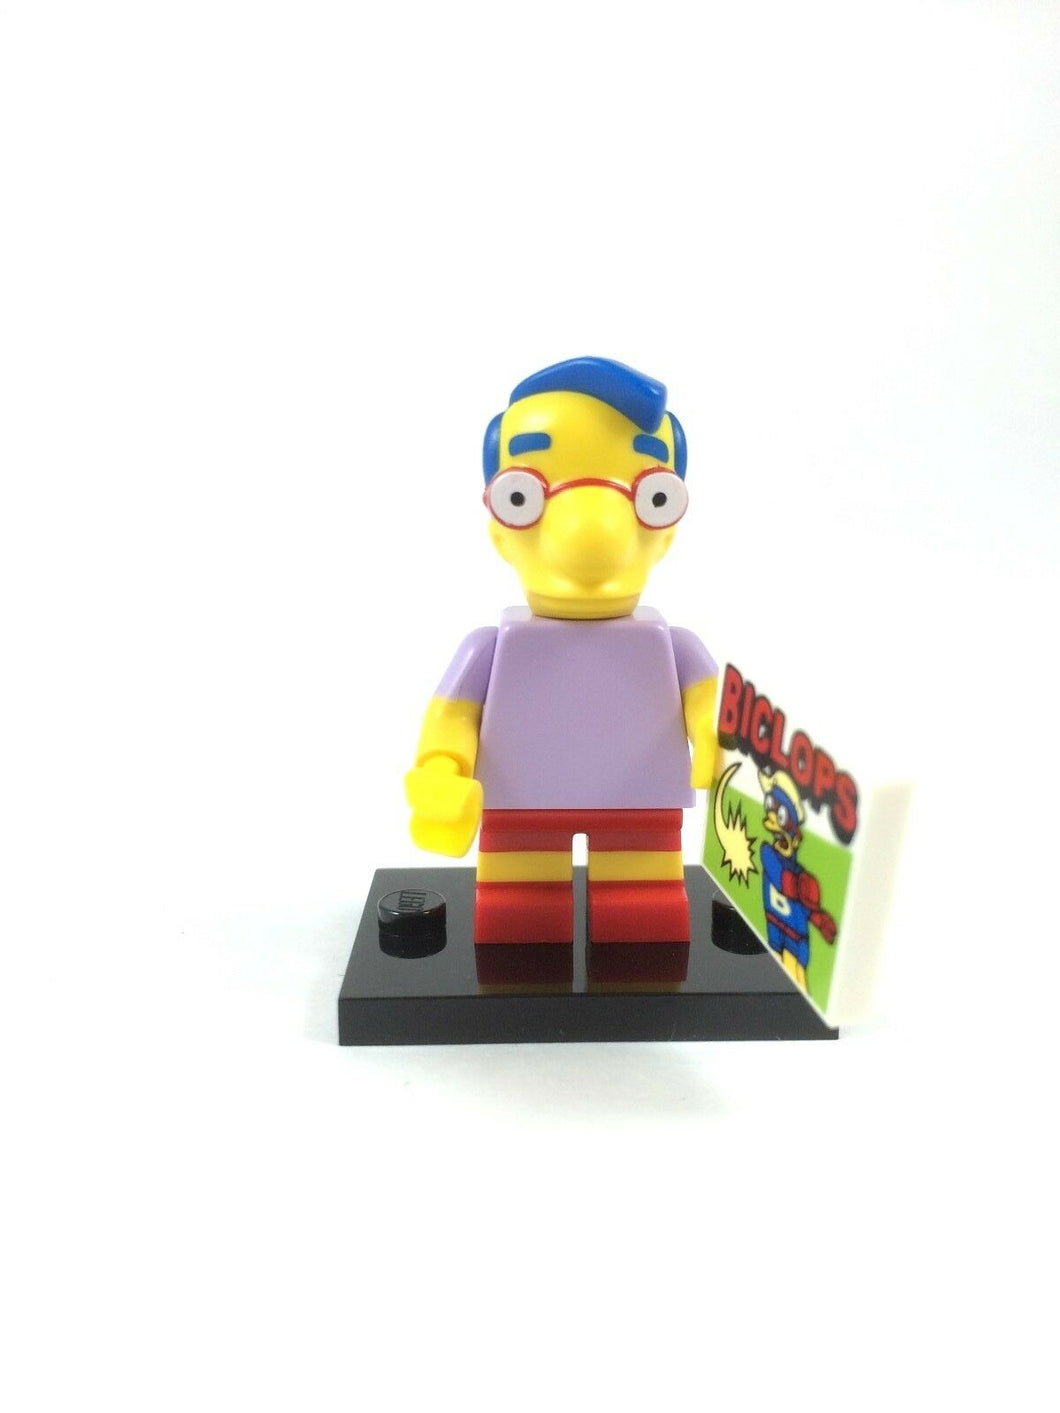 NEW LEGO 71005 MINIFIGURES SERIES S (Simpsons) - Milhouse Van Houten